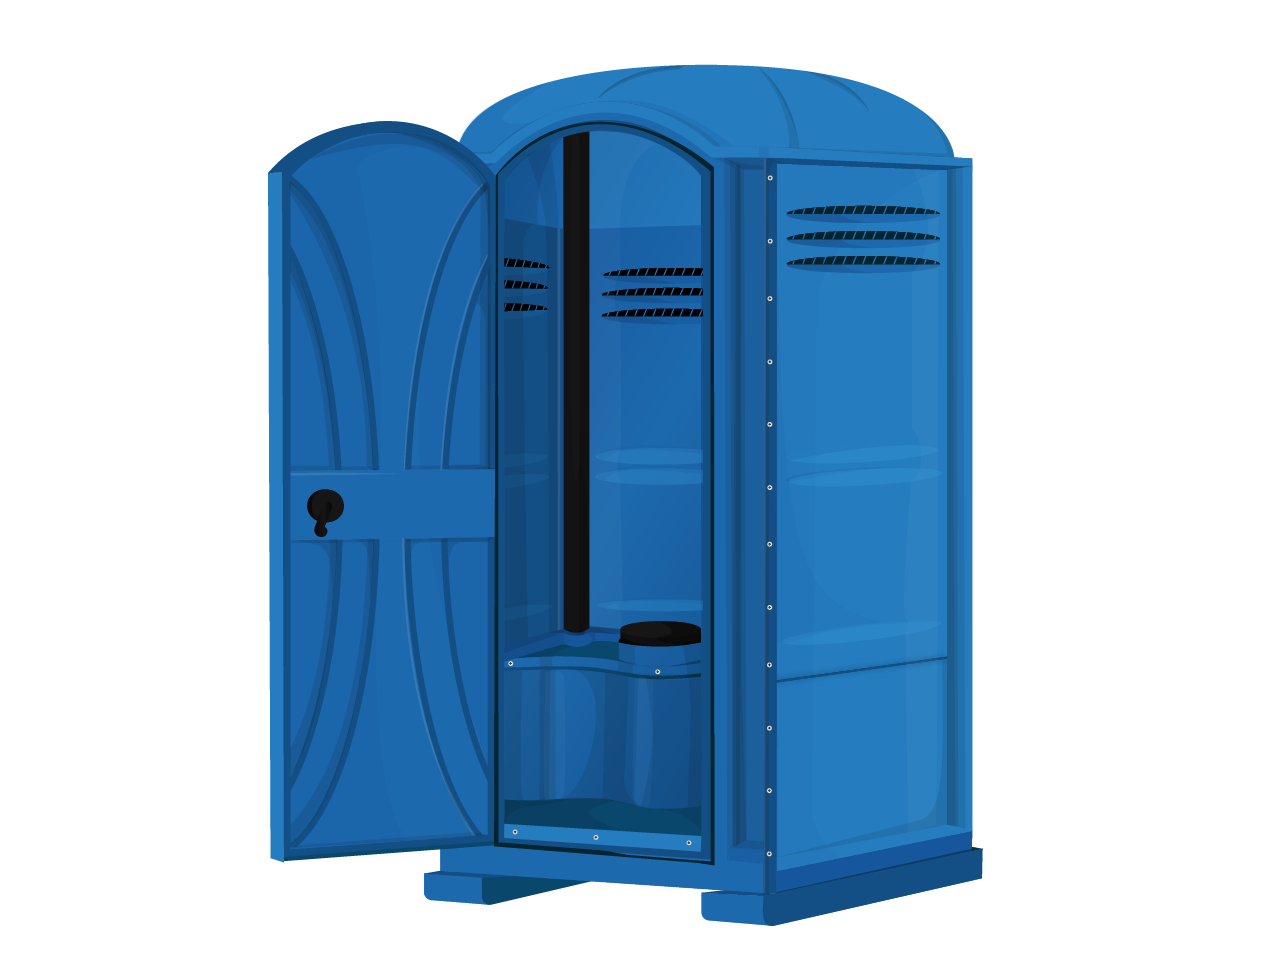 #11934 - Portable Toilet Illustration_open - without logo